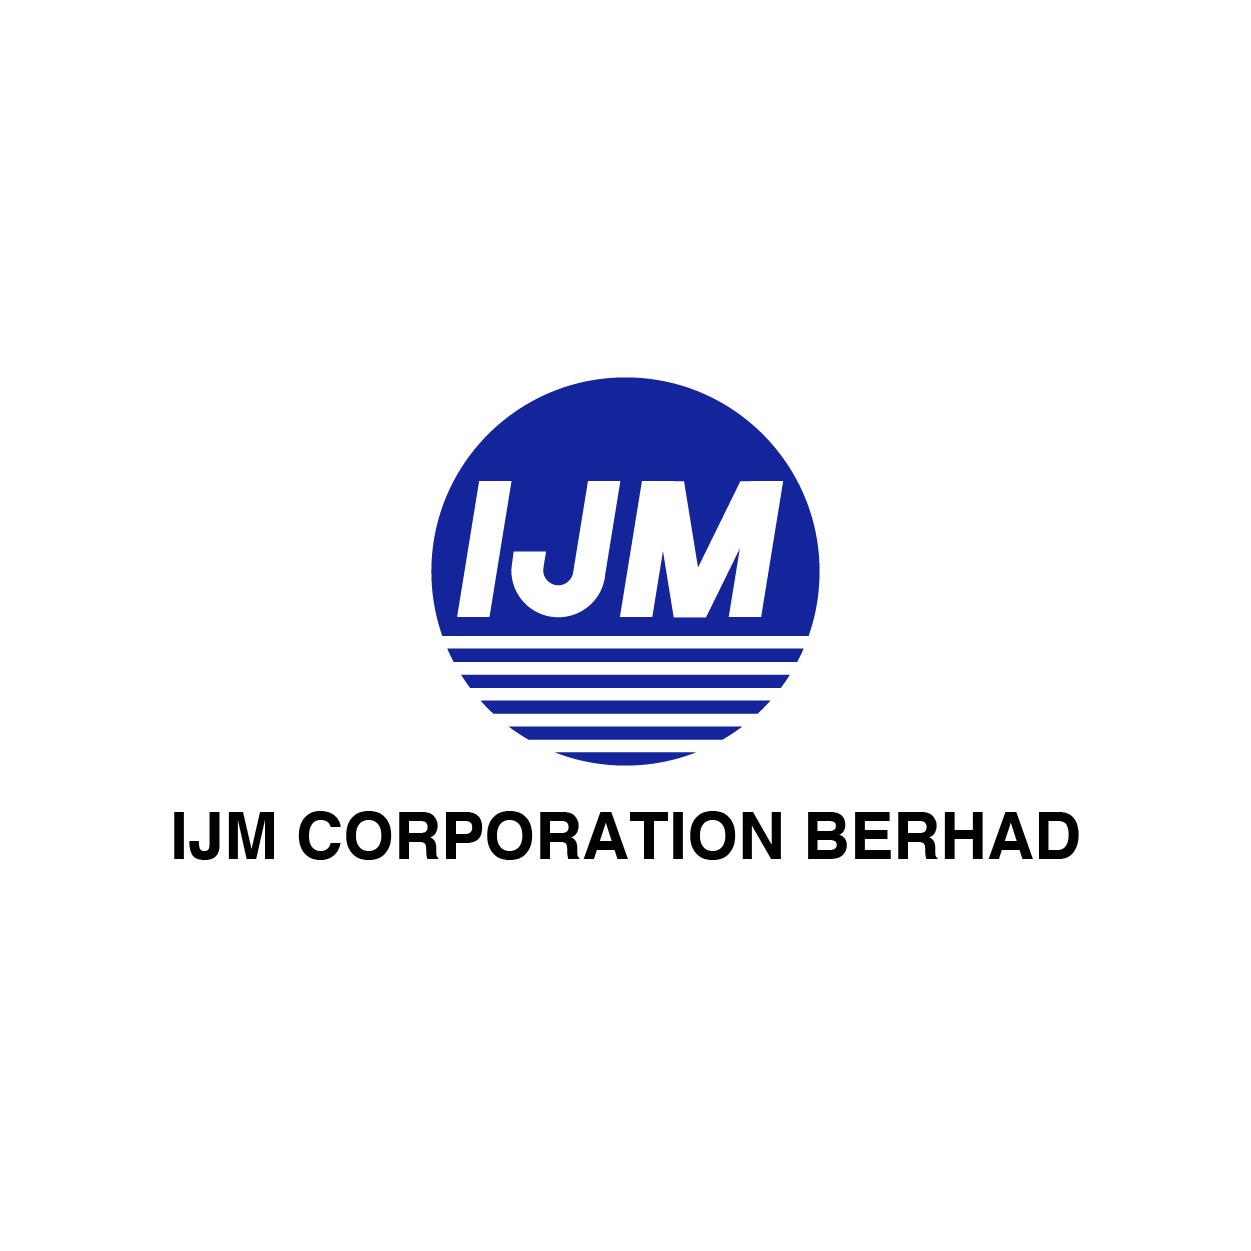 ijm corportation berhad